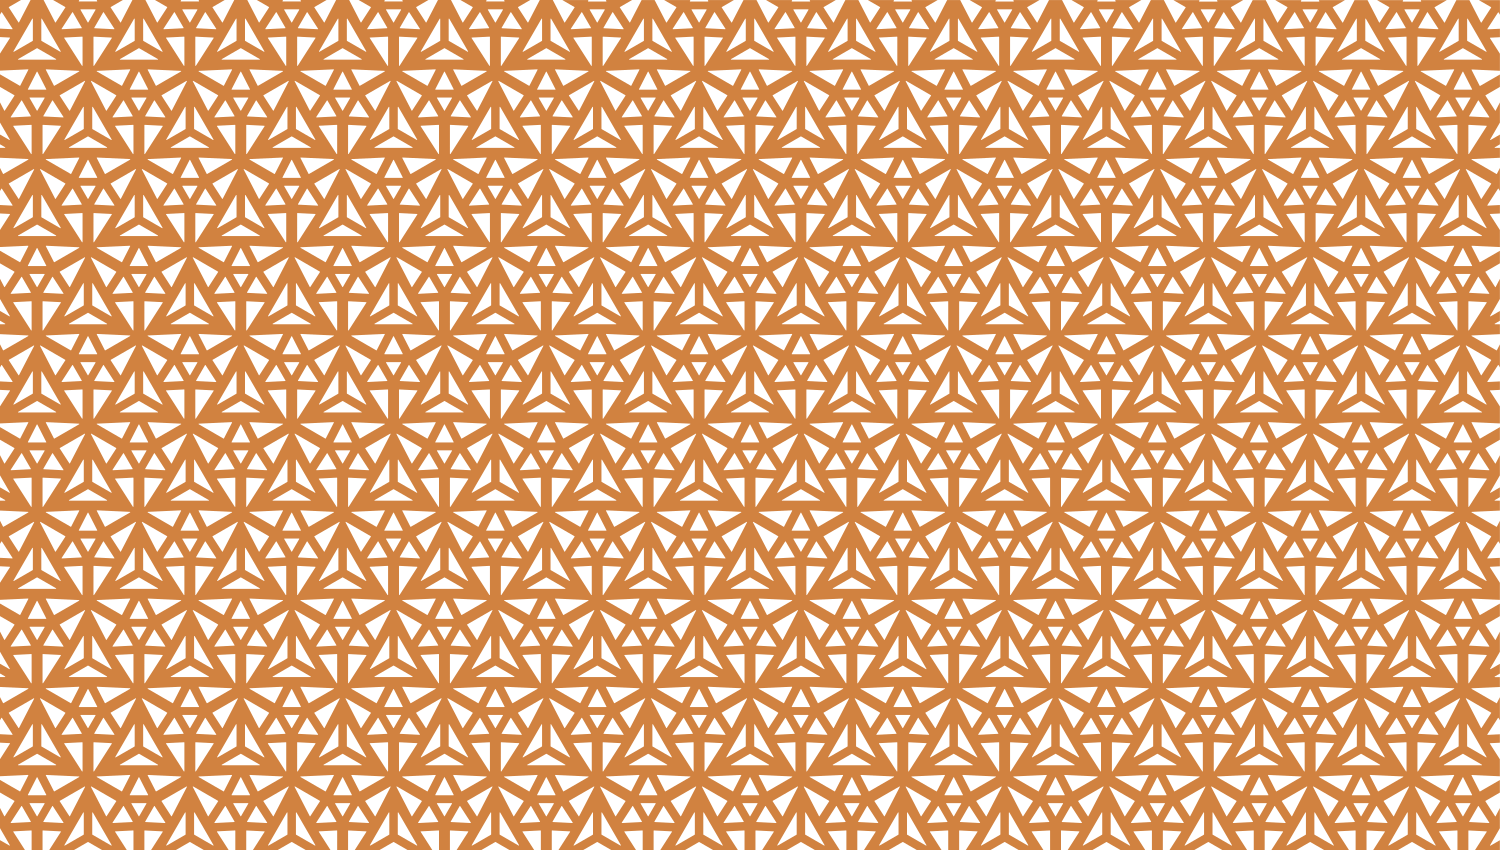 Parasoleil™ Sierpinski© pattern displayed with a ochre color overlay